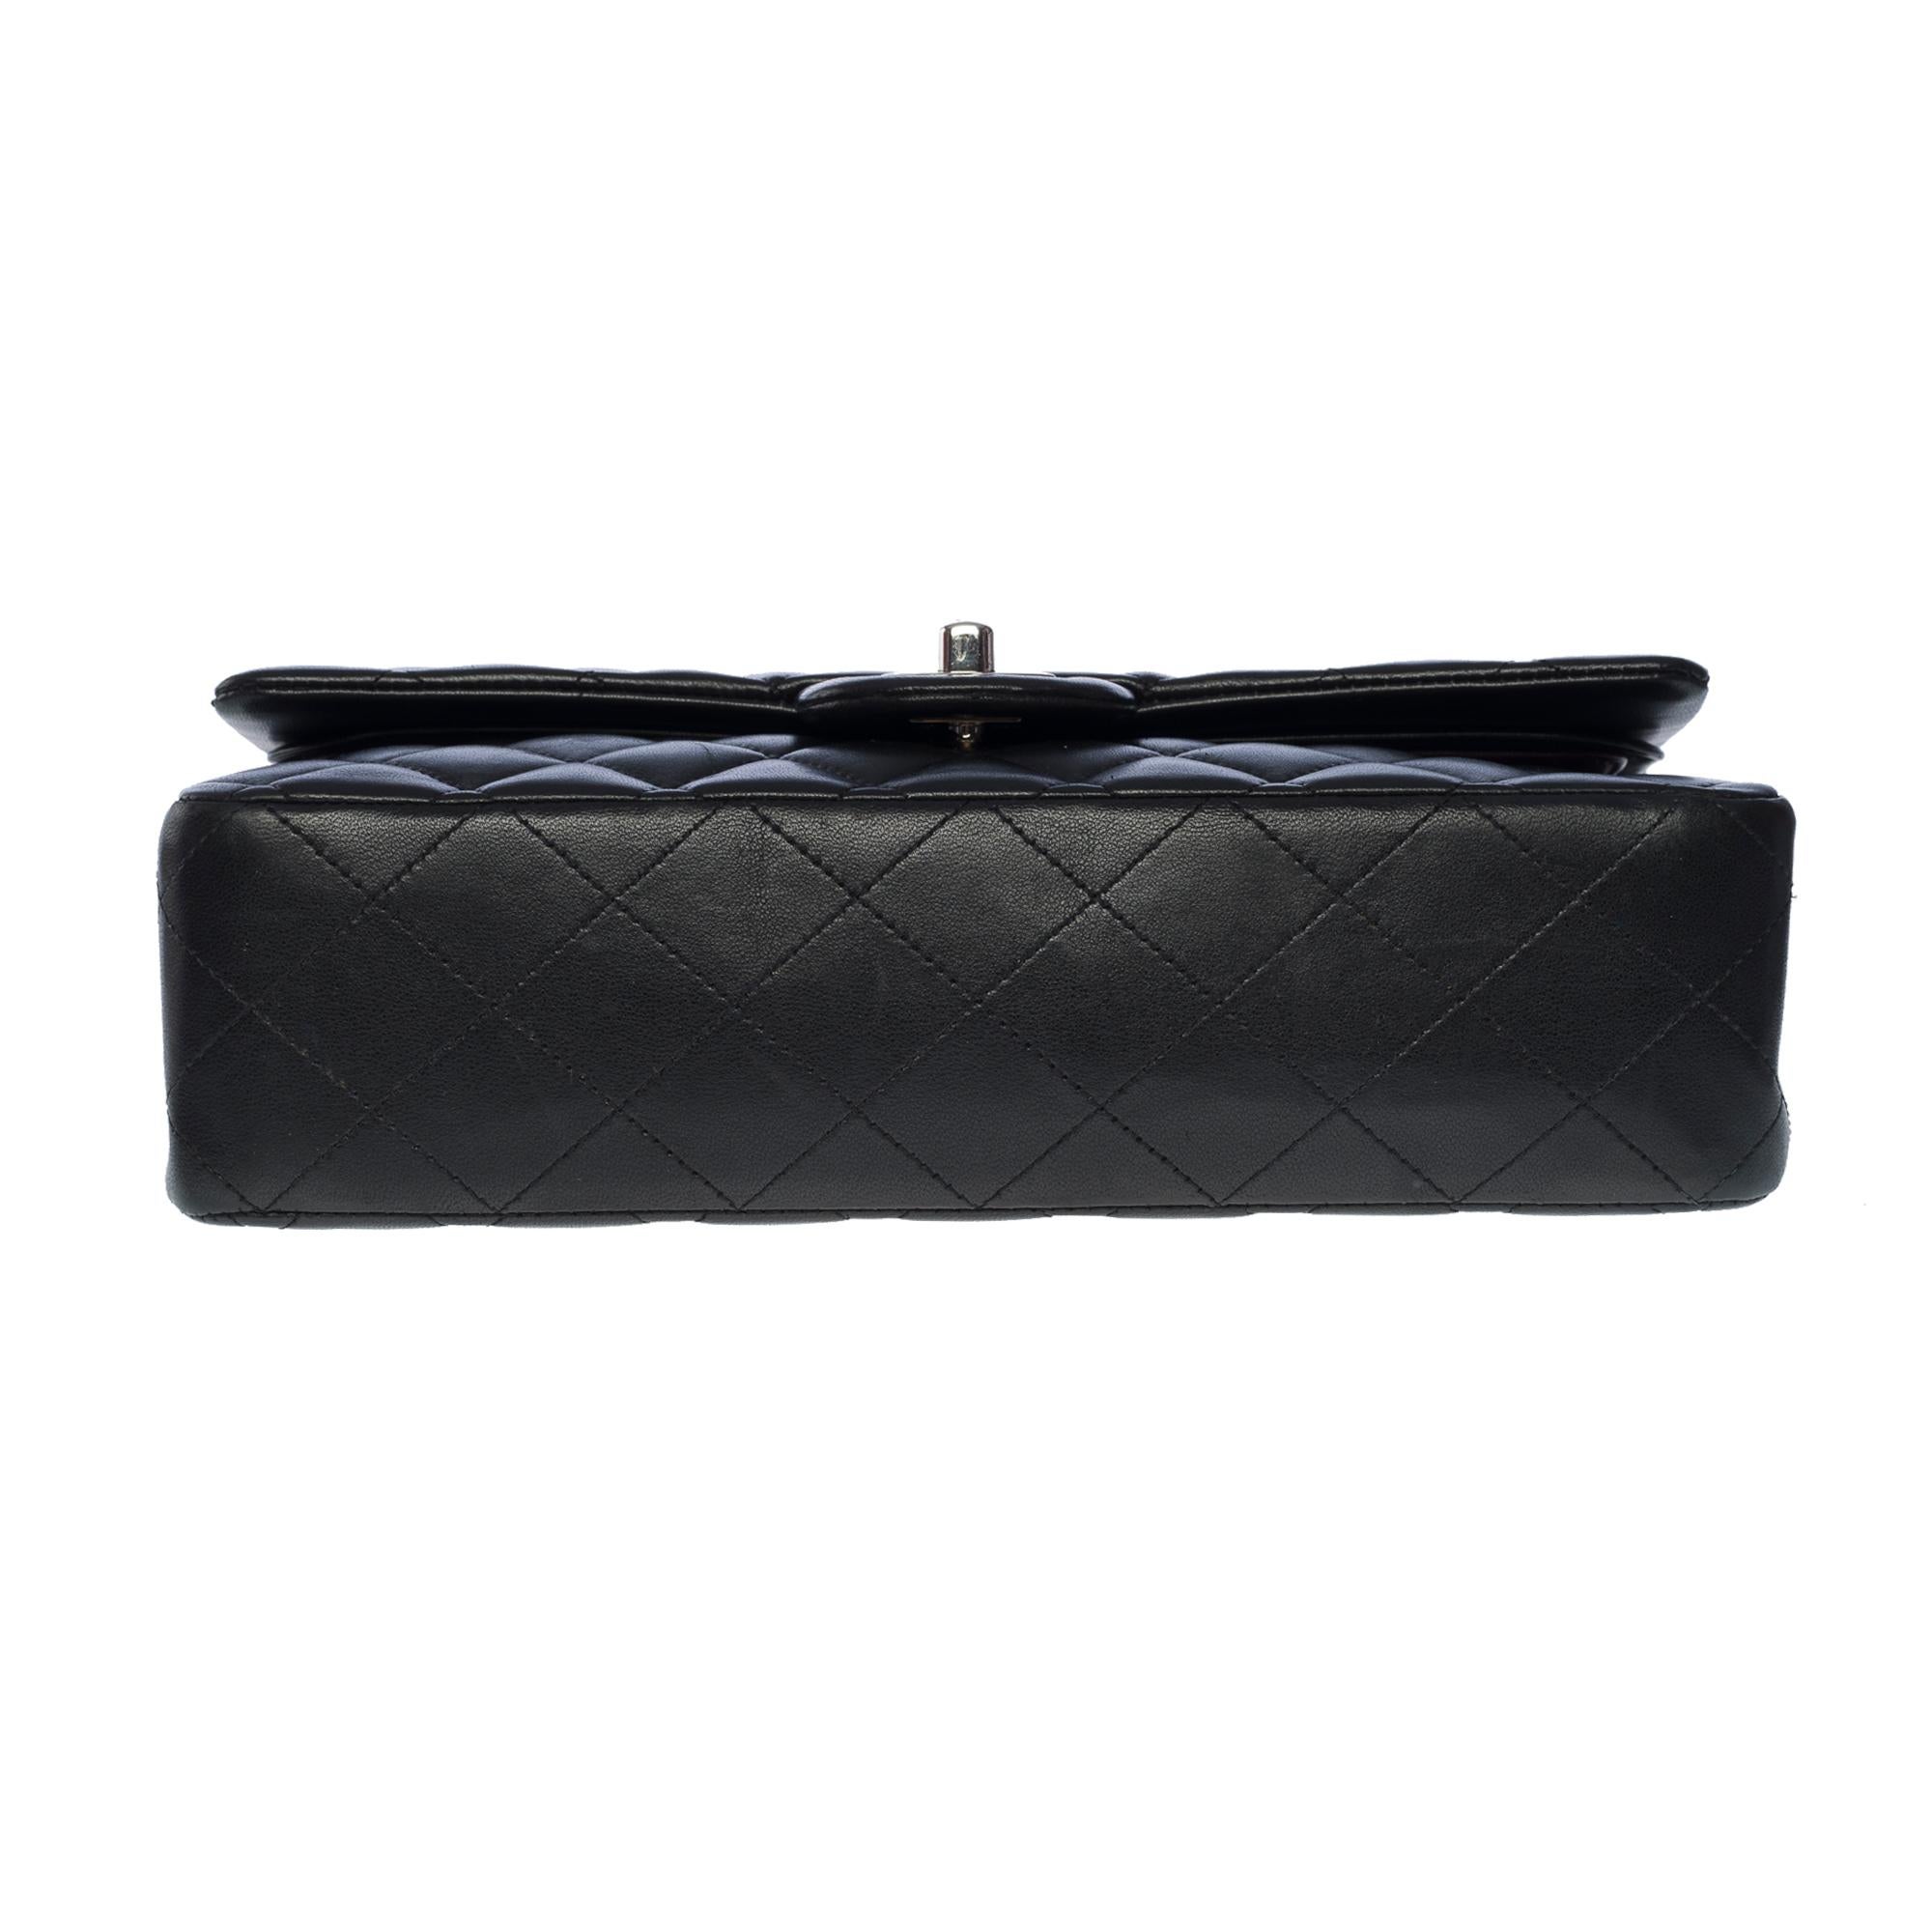 Chanel Timeless Medium 25cm double flap shoulder bag in black lambskin, SHW 6